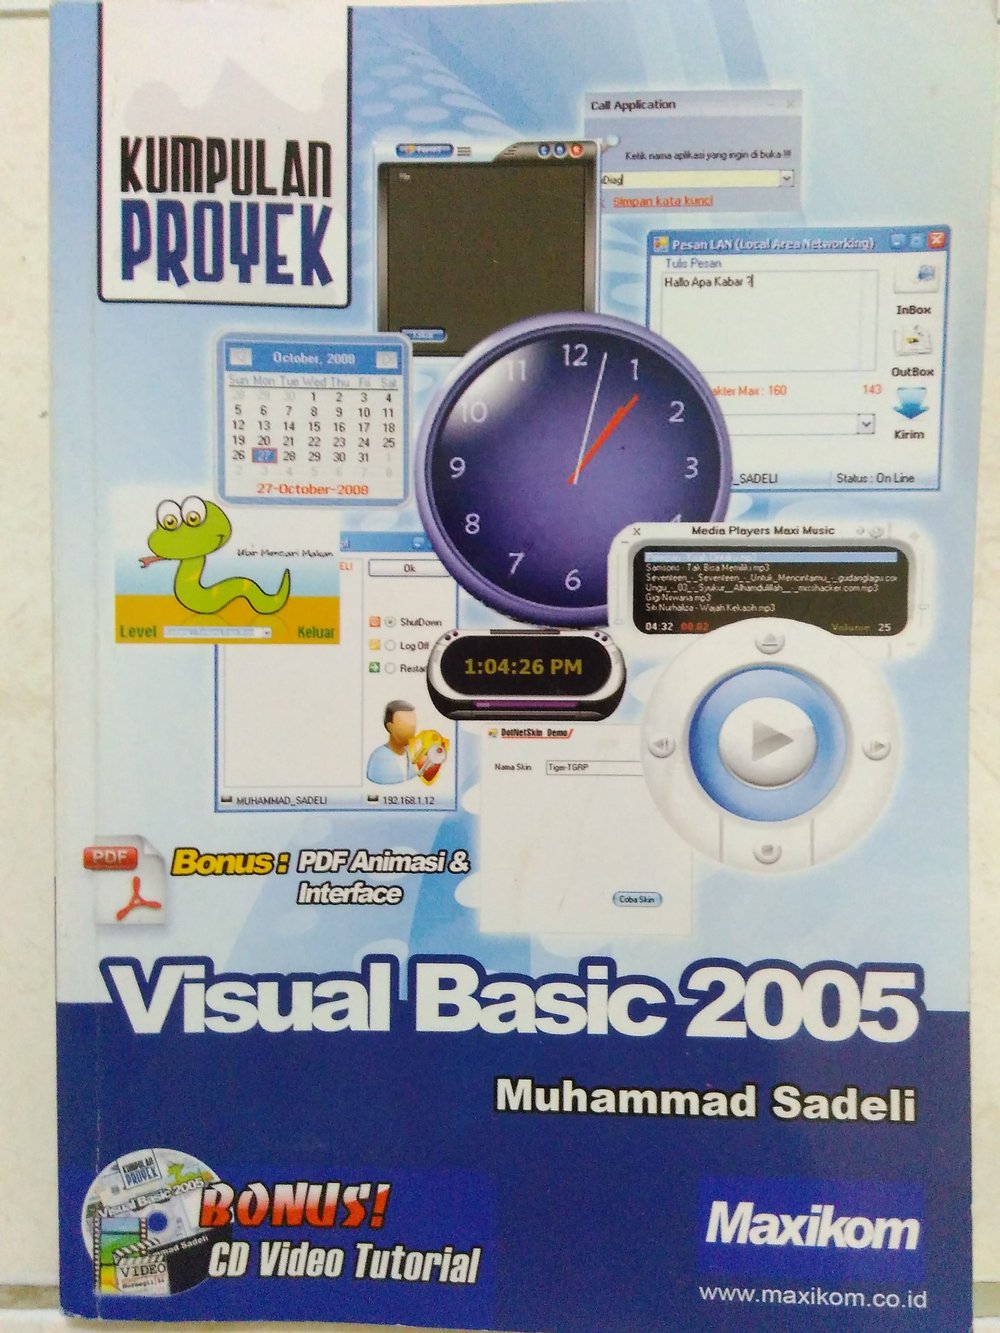 Kumpulan Proyek Visual Basic 2005